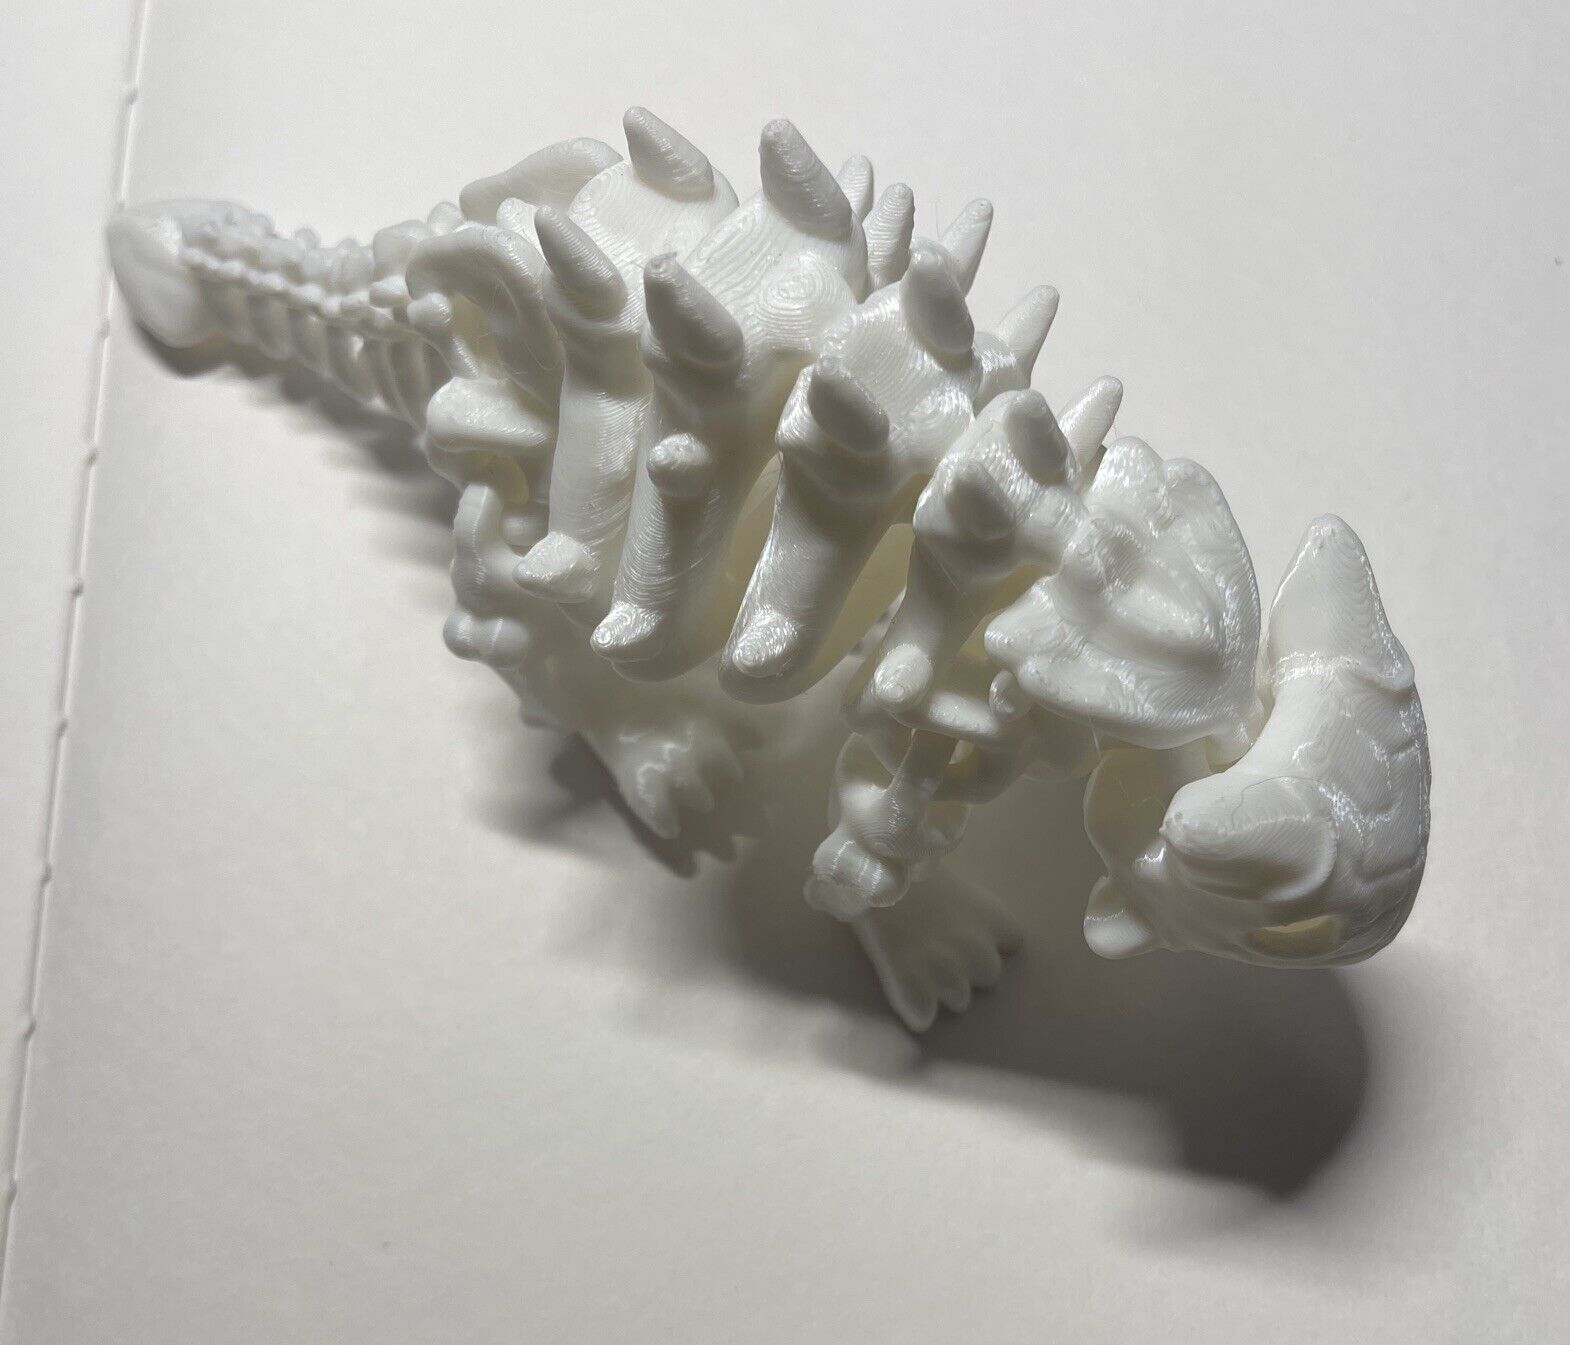 3d printed fossil dinosaur